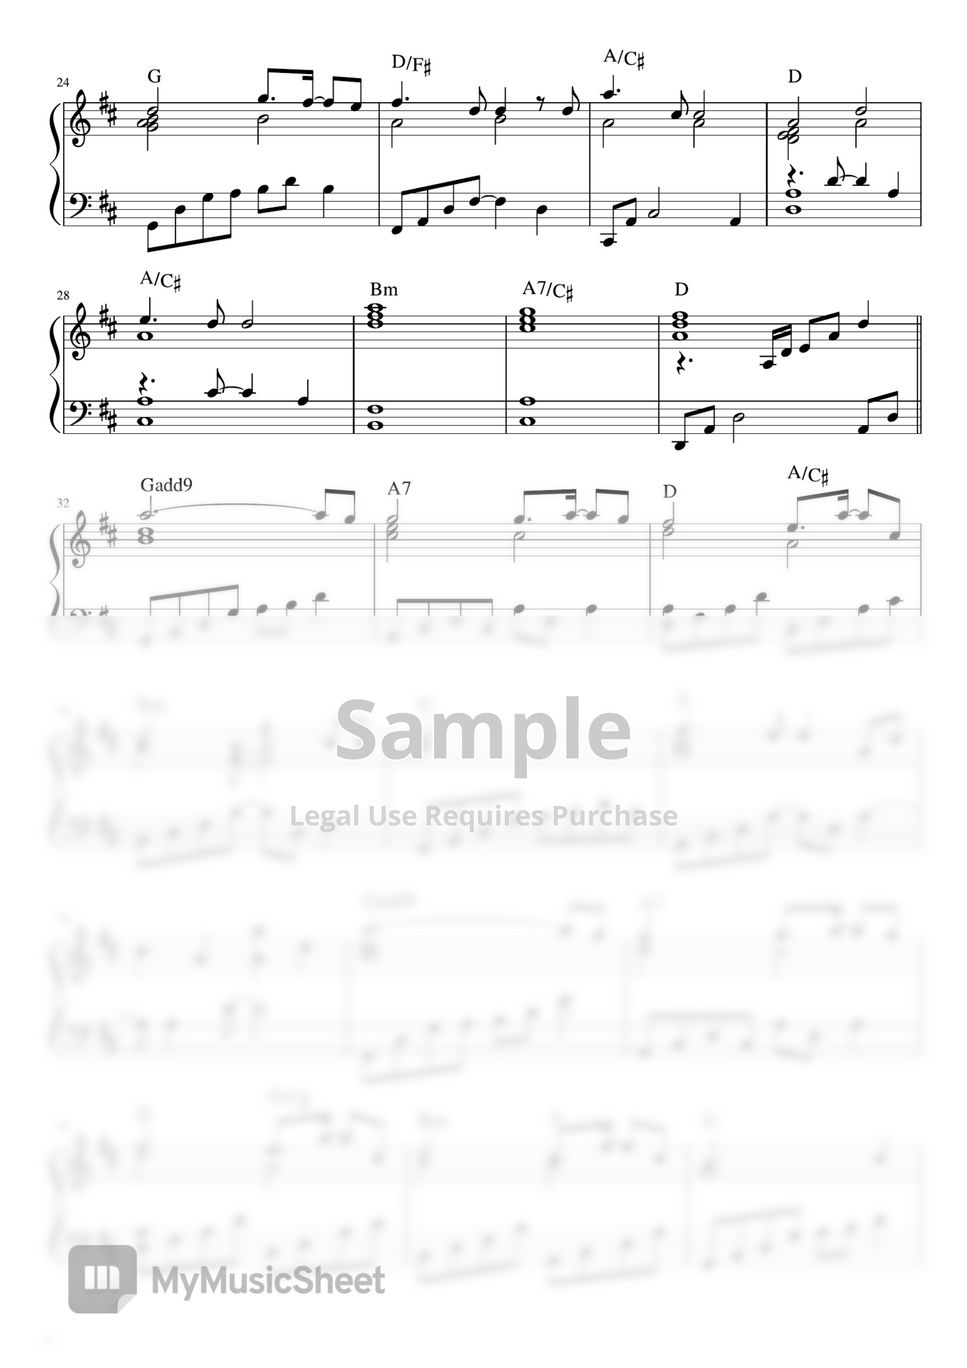 Mili - オリジン Origin (Mercstoria OP) [Piano sheet + MIDI]